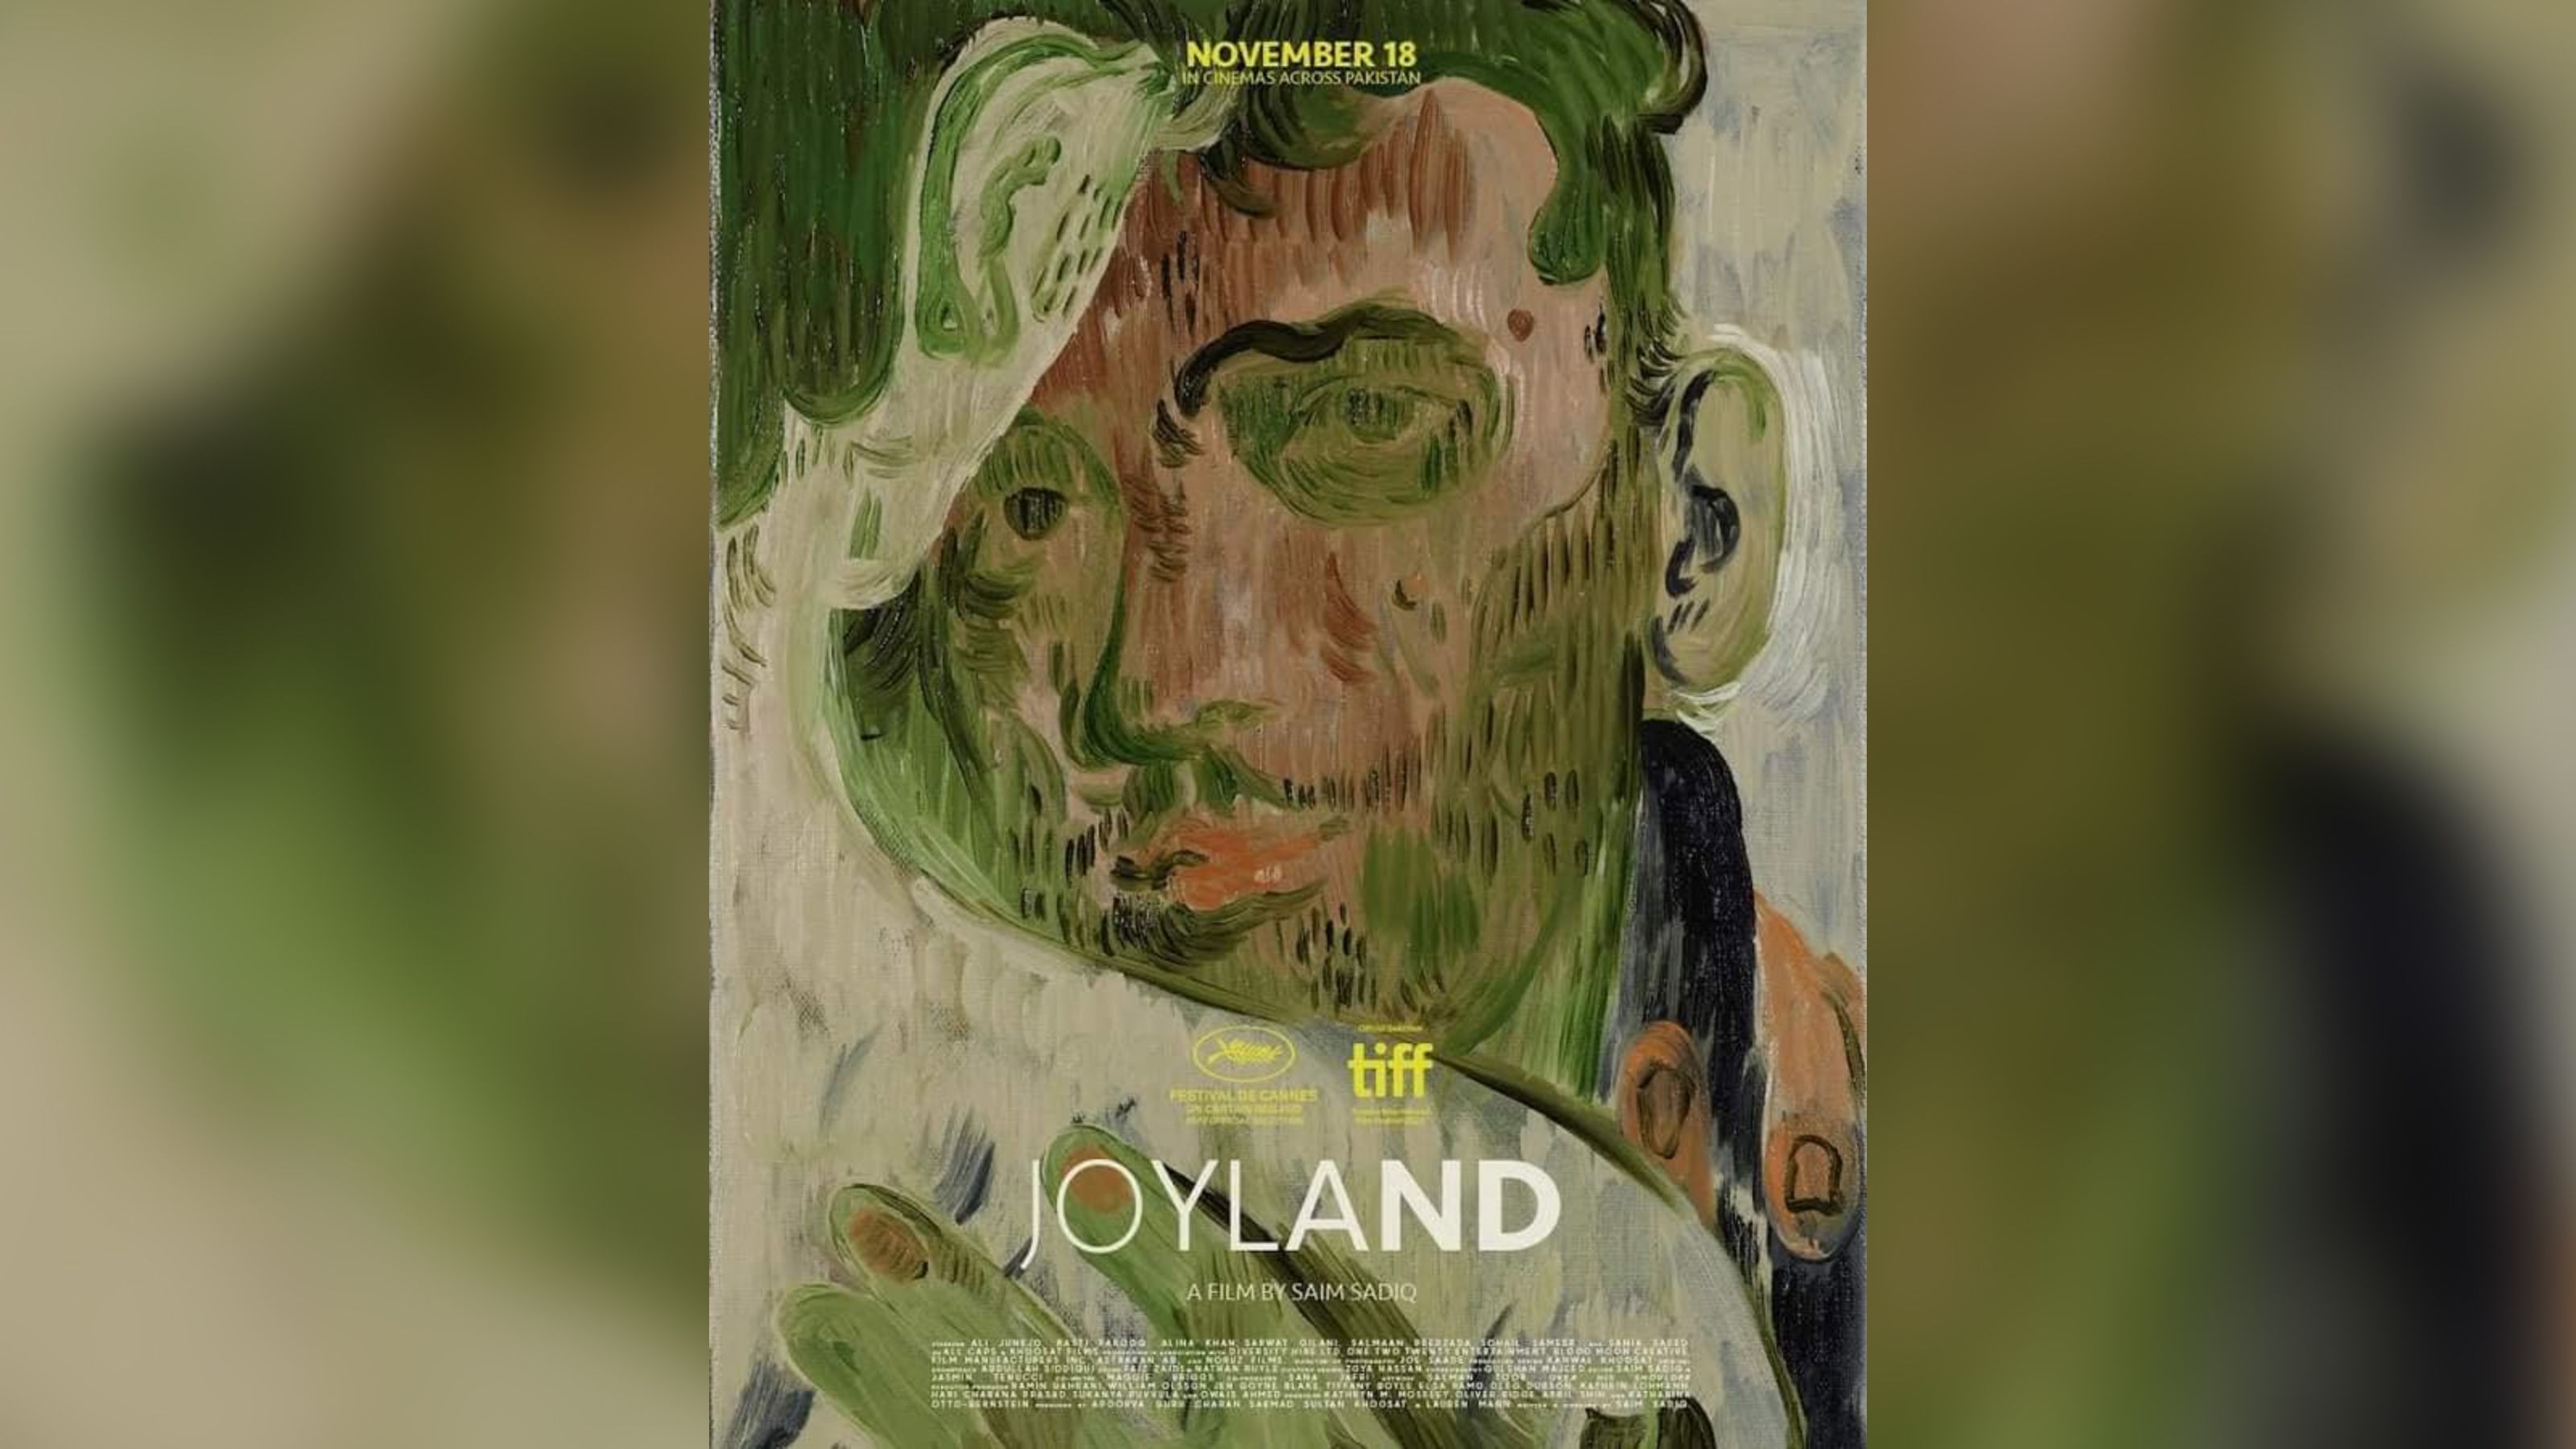 Shruti Hassan Xxsexy Videoxxx - Joyland' ban: Pakistan blocks national release of movie depicting story of  sexual liberation | CNN